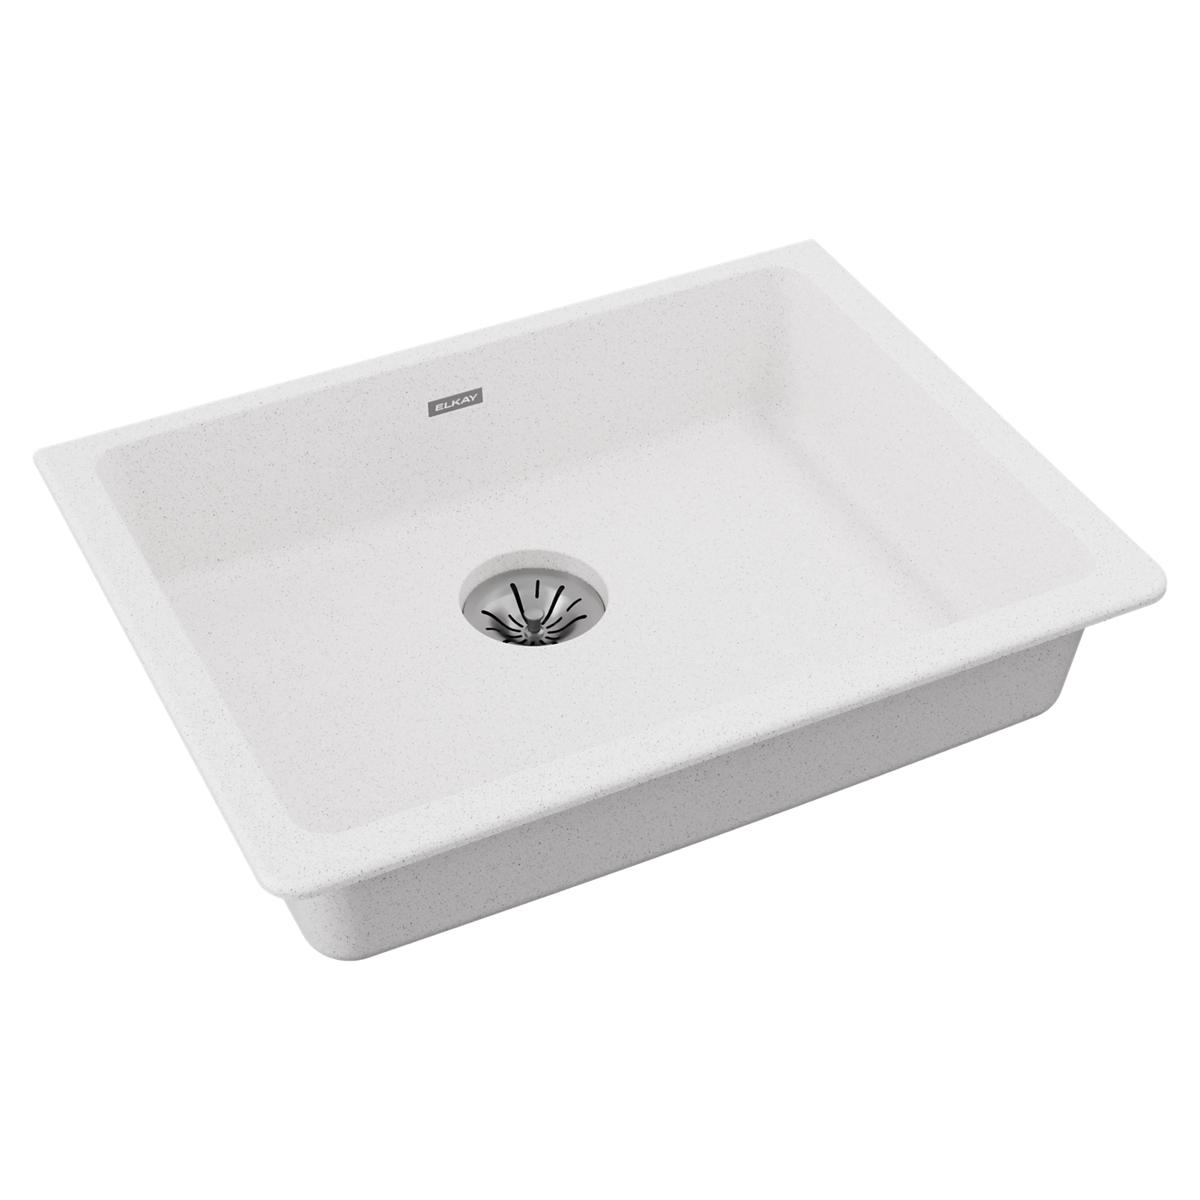 Elkay Quartz Classic 25" x 18-1/2" x 5-1/2" Single Bowl Undermount ADA Sink with Perfect Drain